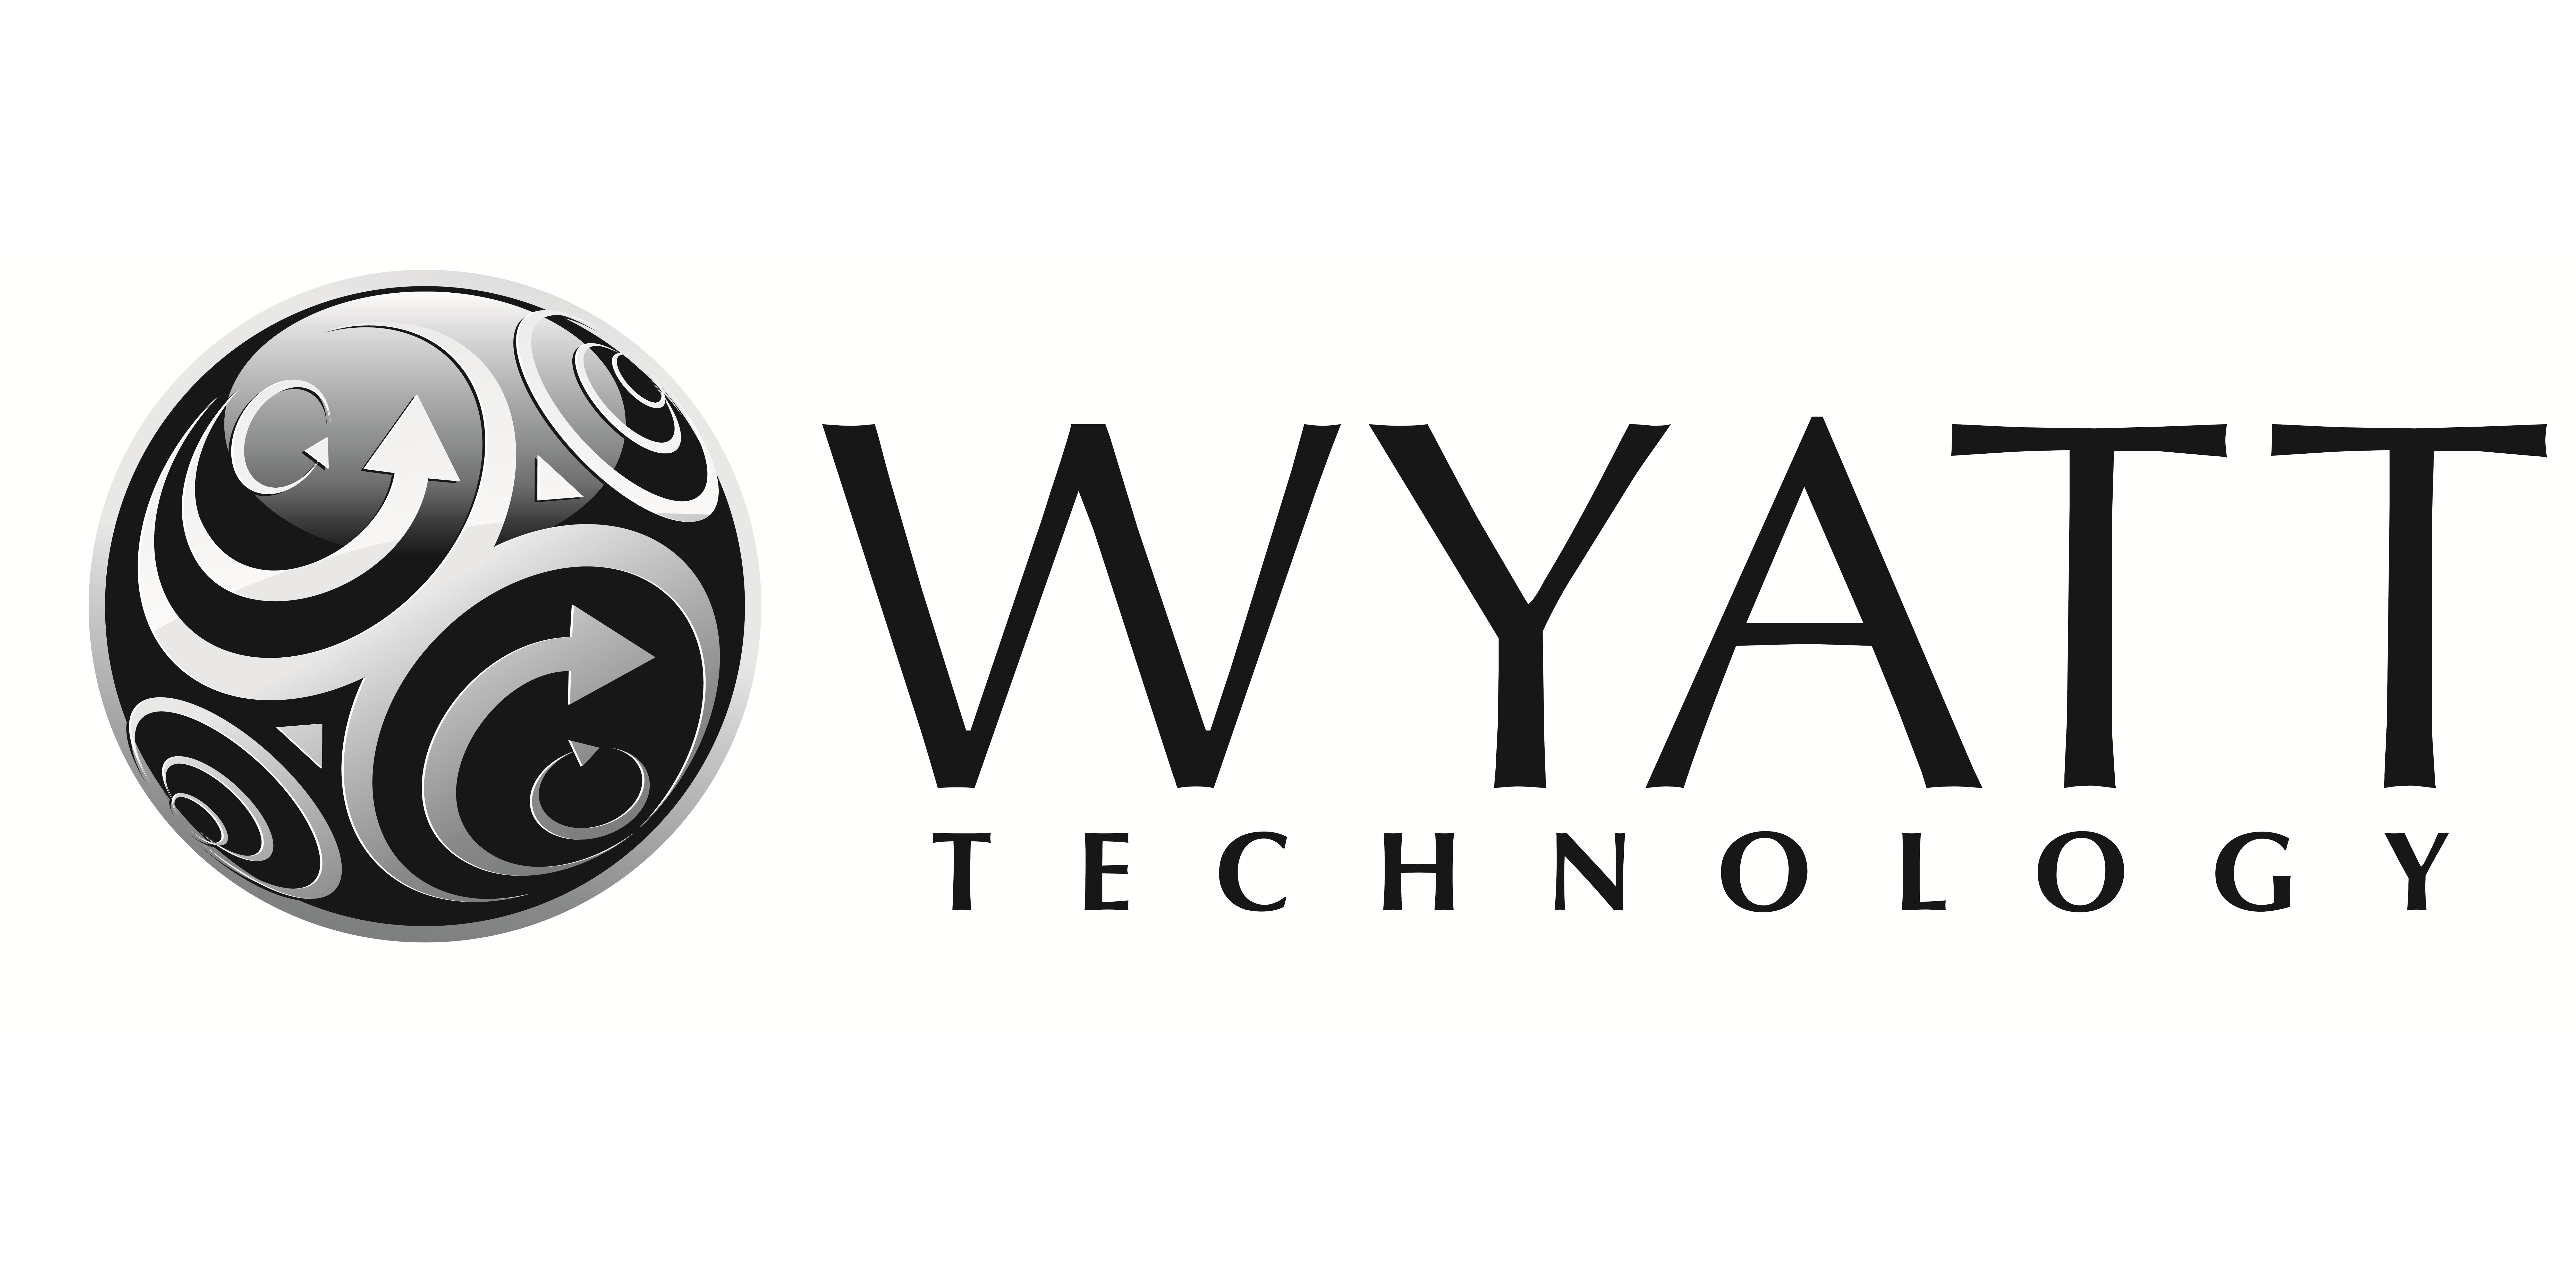 Wyatt_New_Logo_and_Company_Name_Large_012.jpg